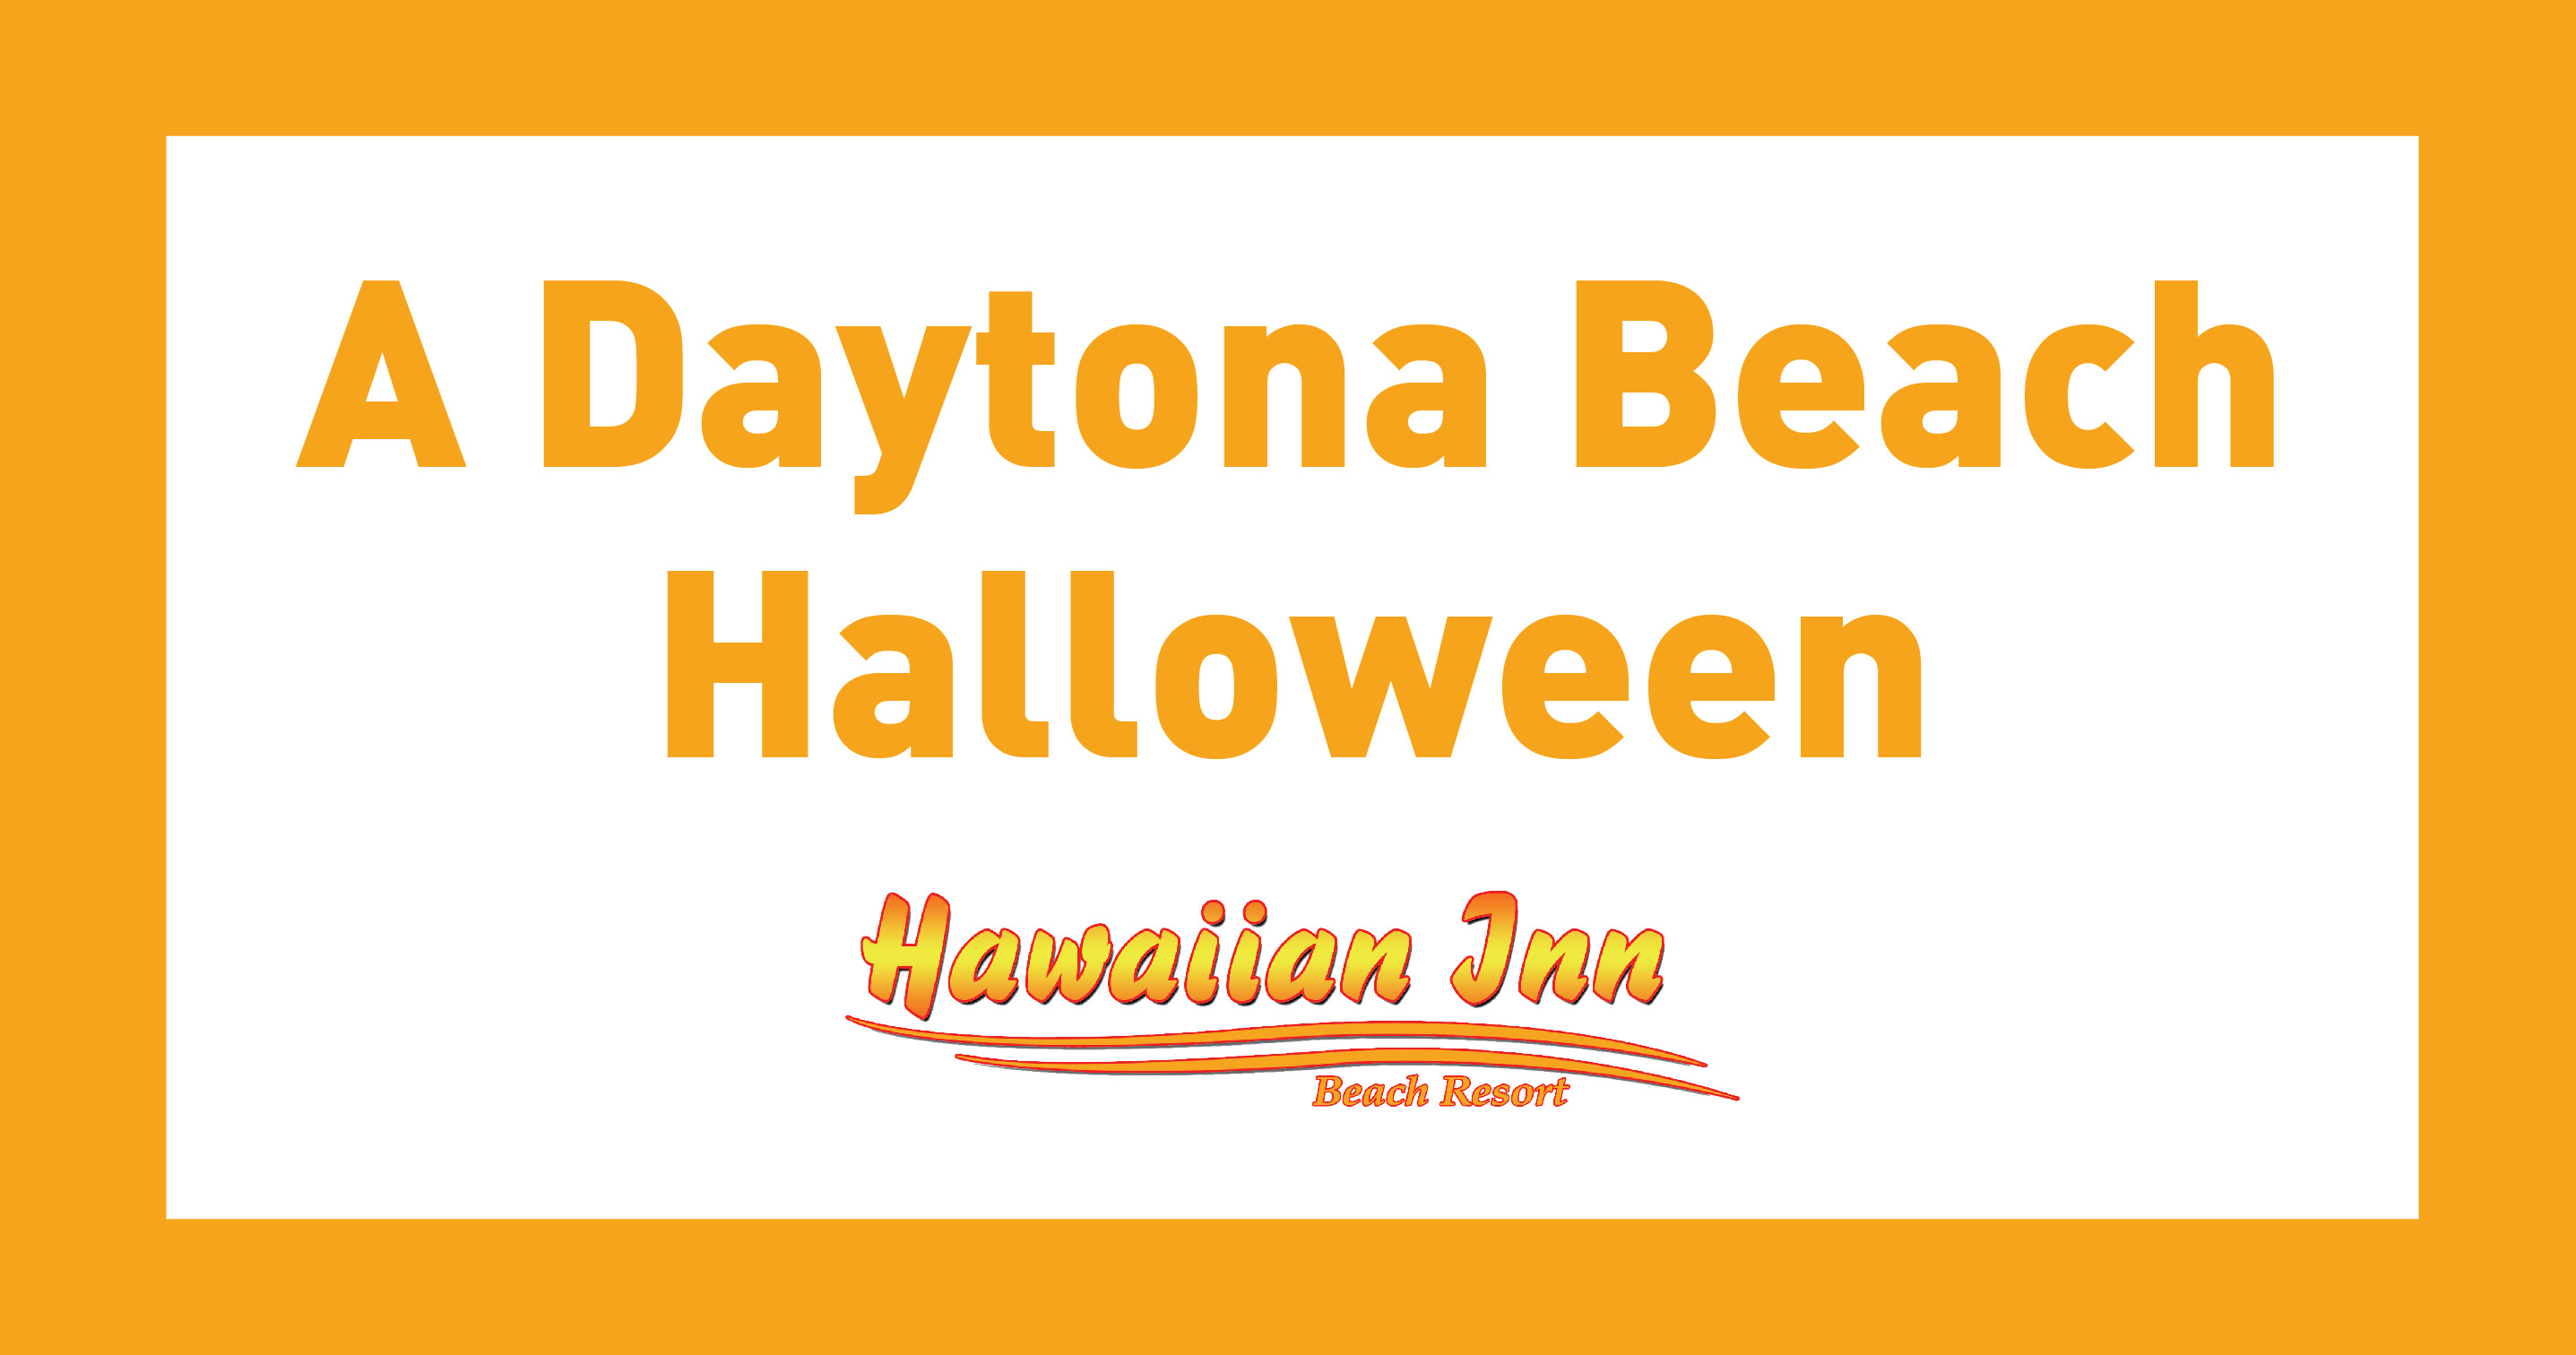 A Daytona Beach Halloween